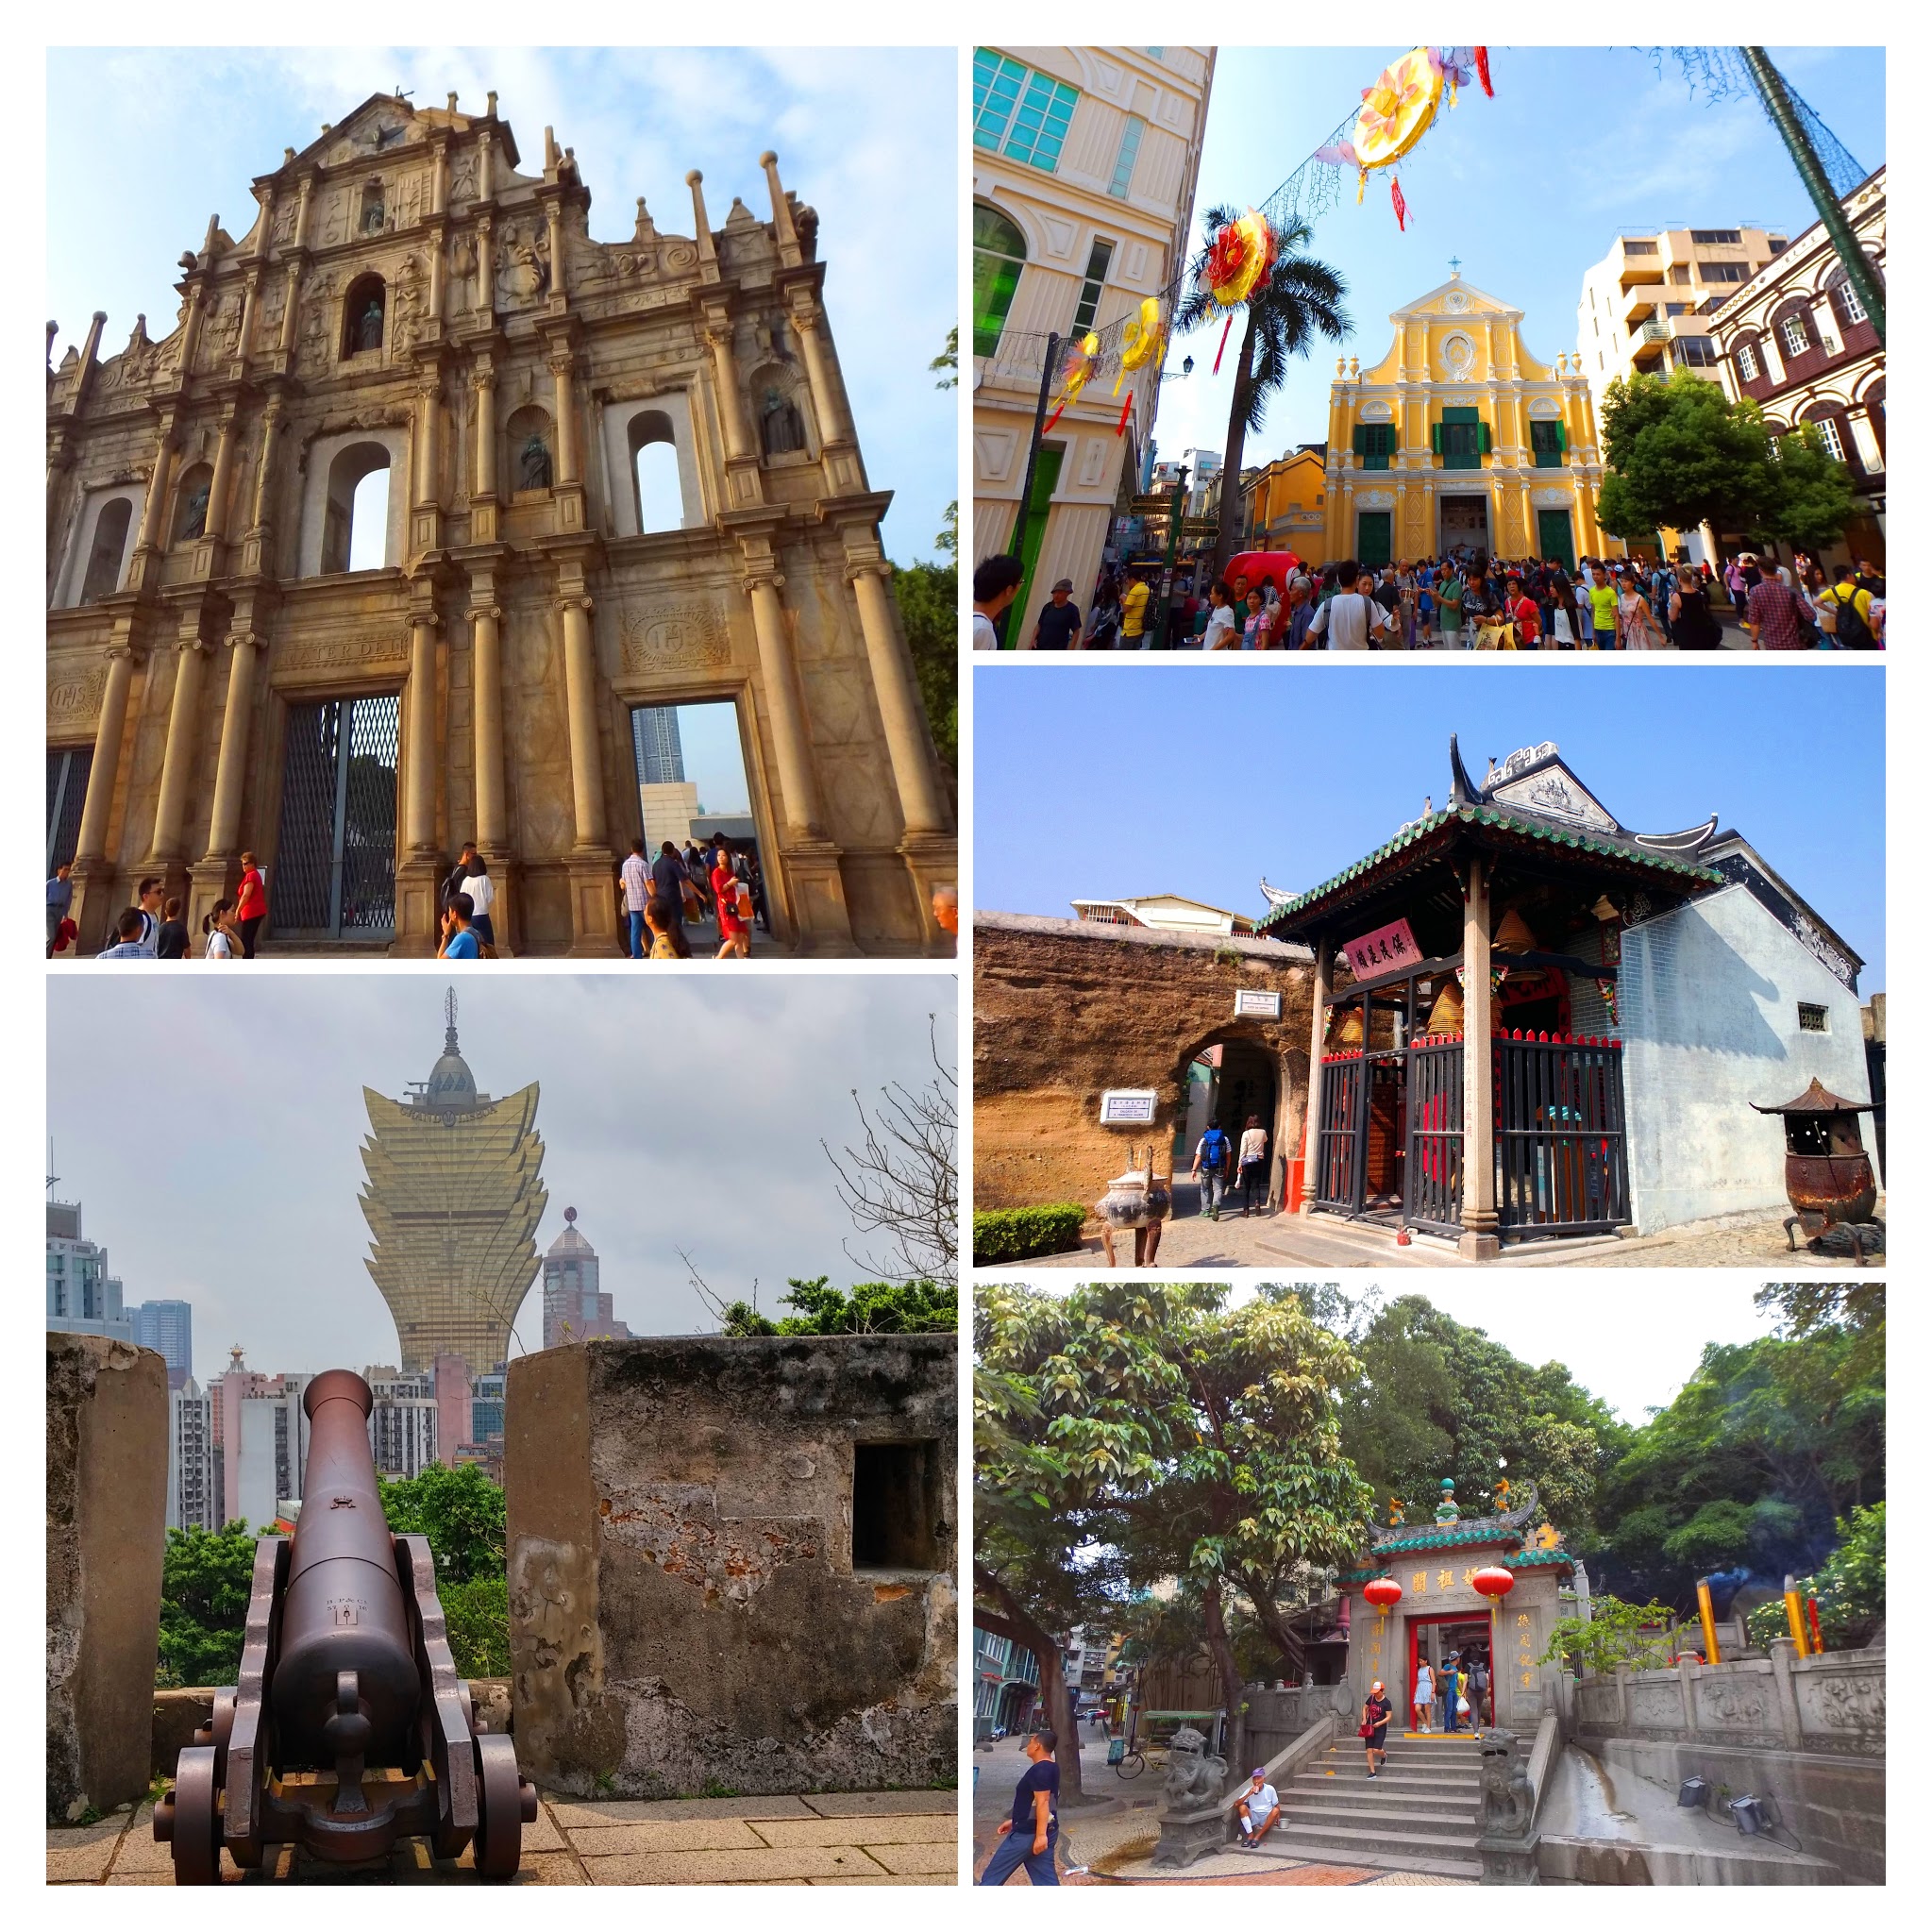 Macau's World Heritage buildings